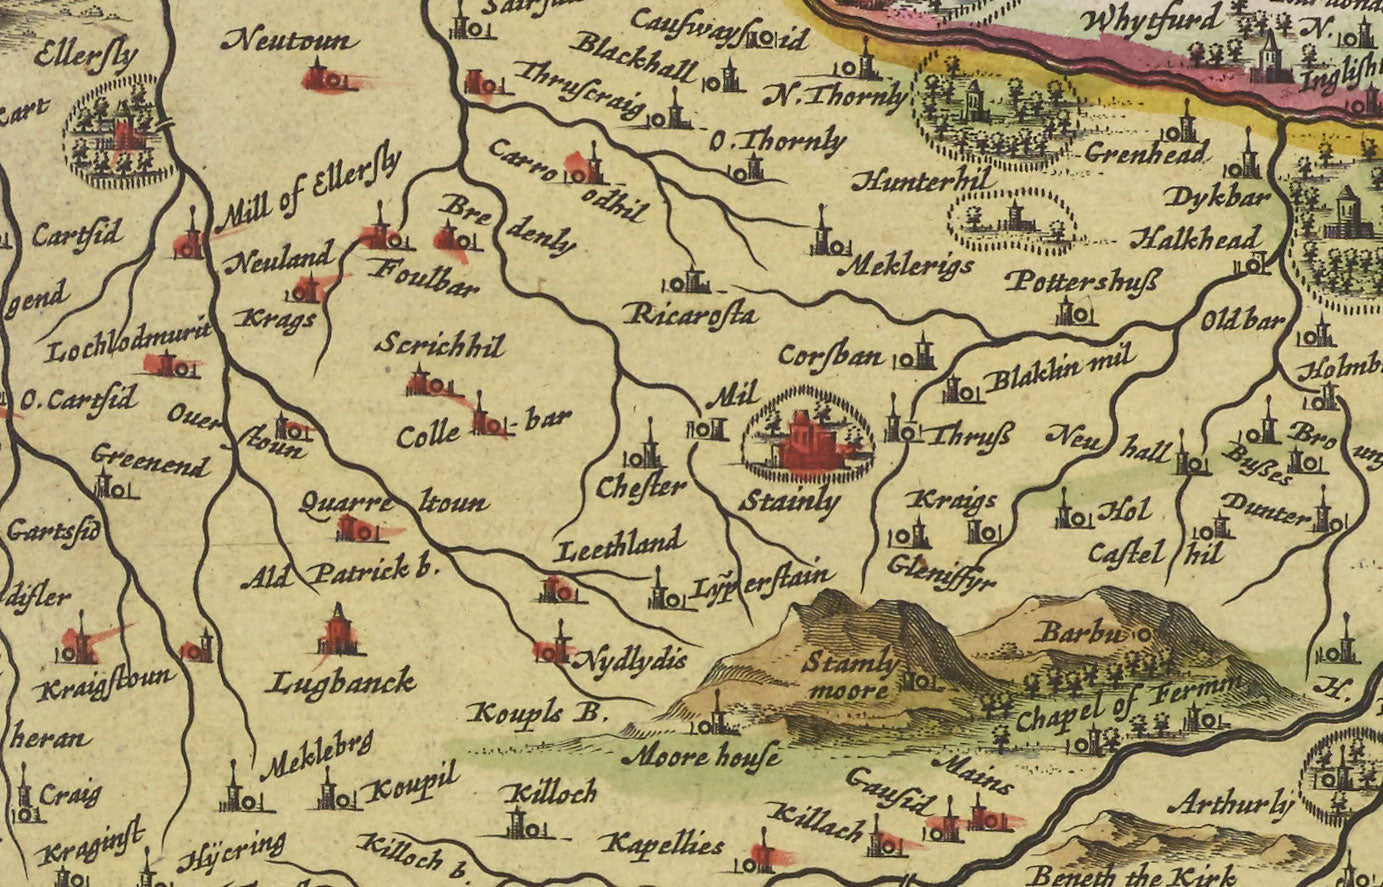 Old Map of Renfrewshire in 1665 by Joan Blaeu - Glasgow, Renfrew, Paisley, Inchinnan, Bishopton, River Clyde